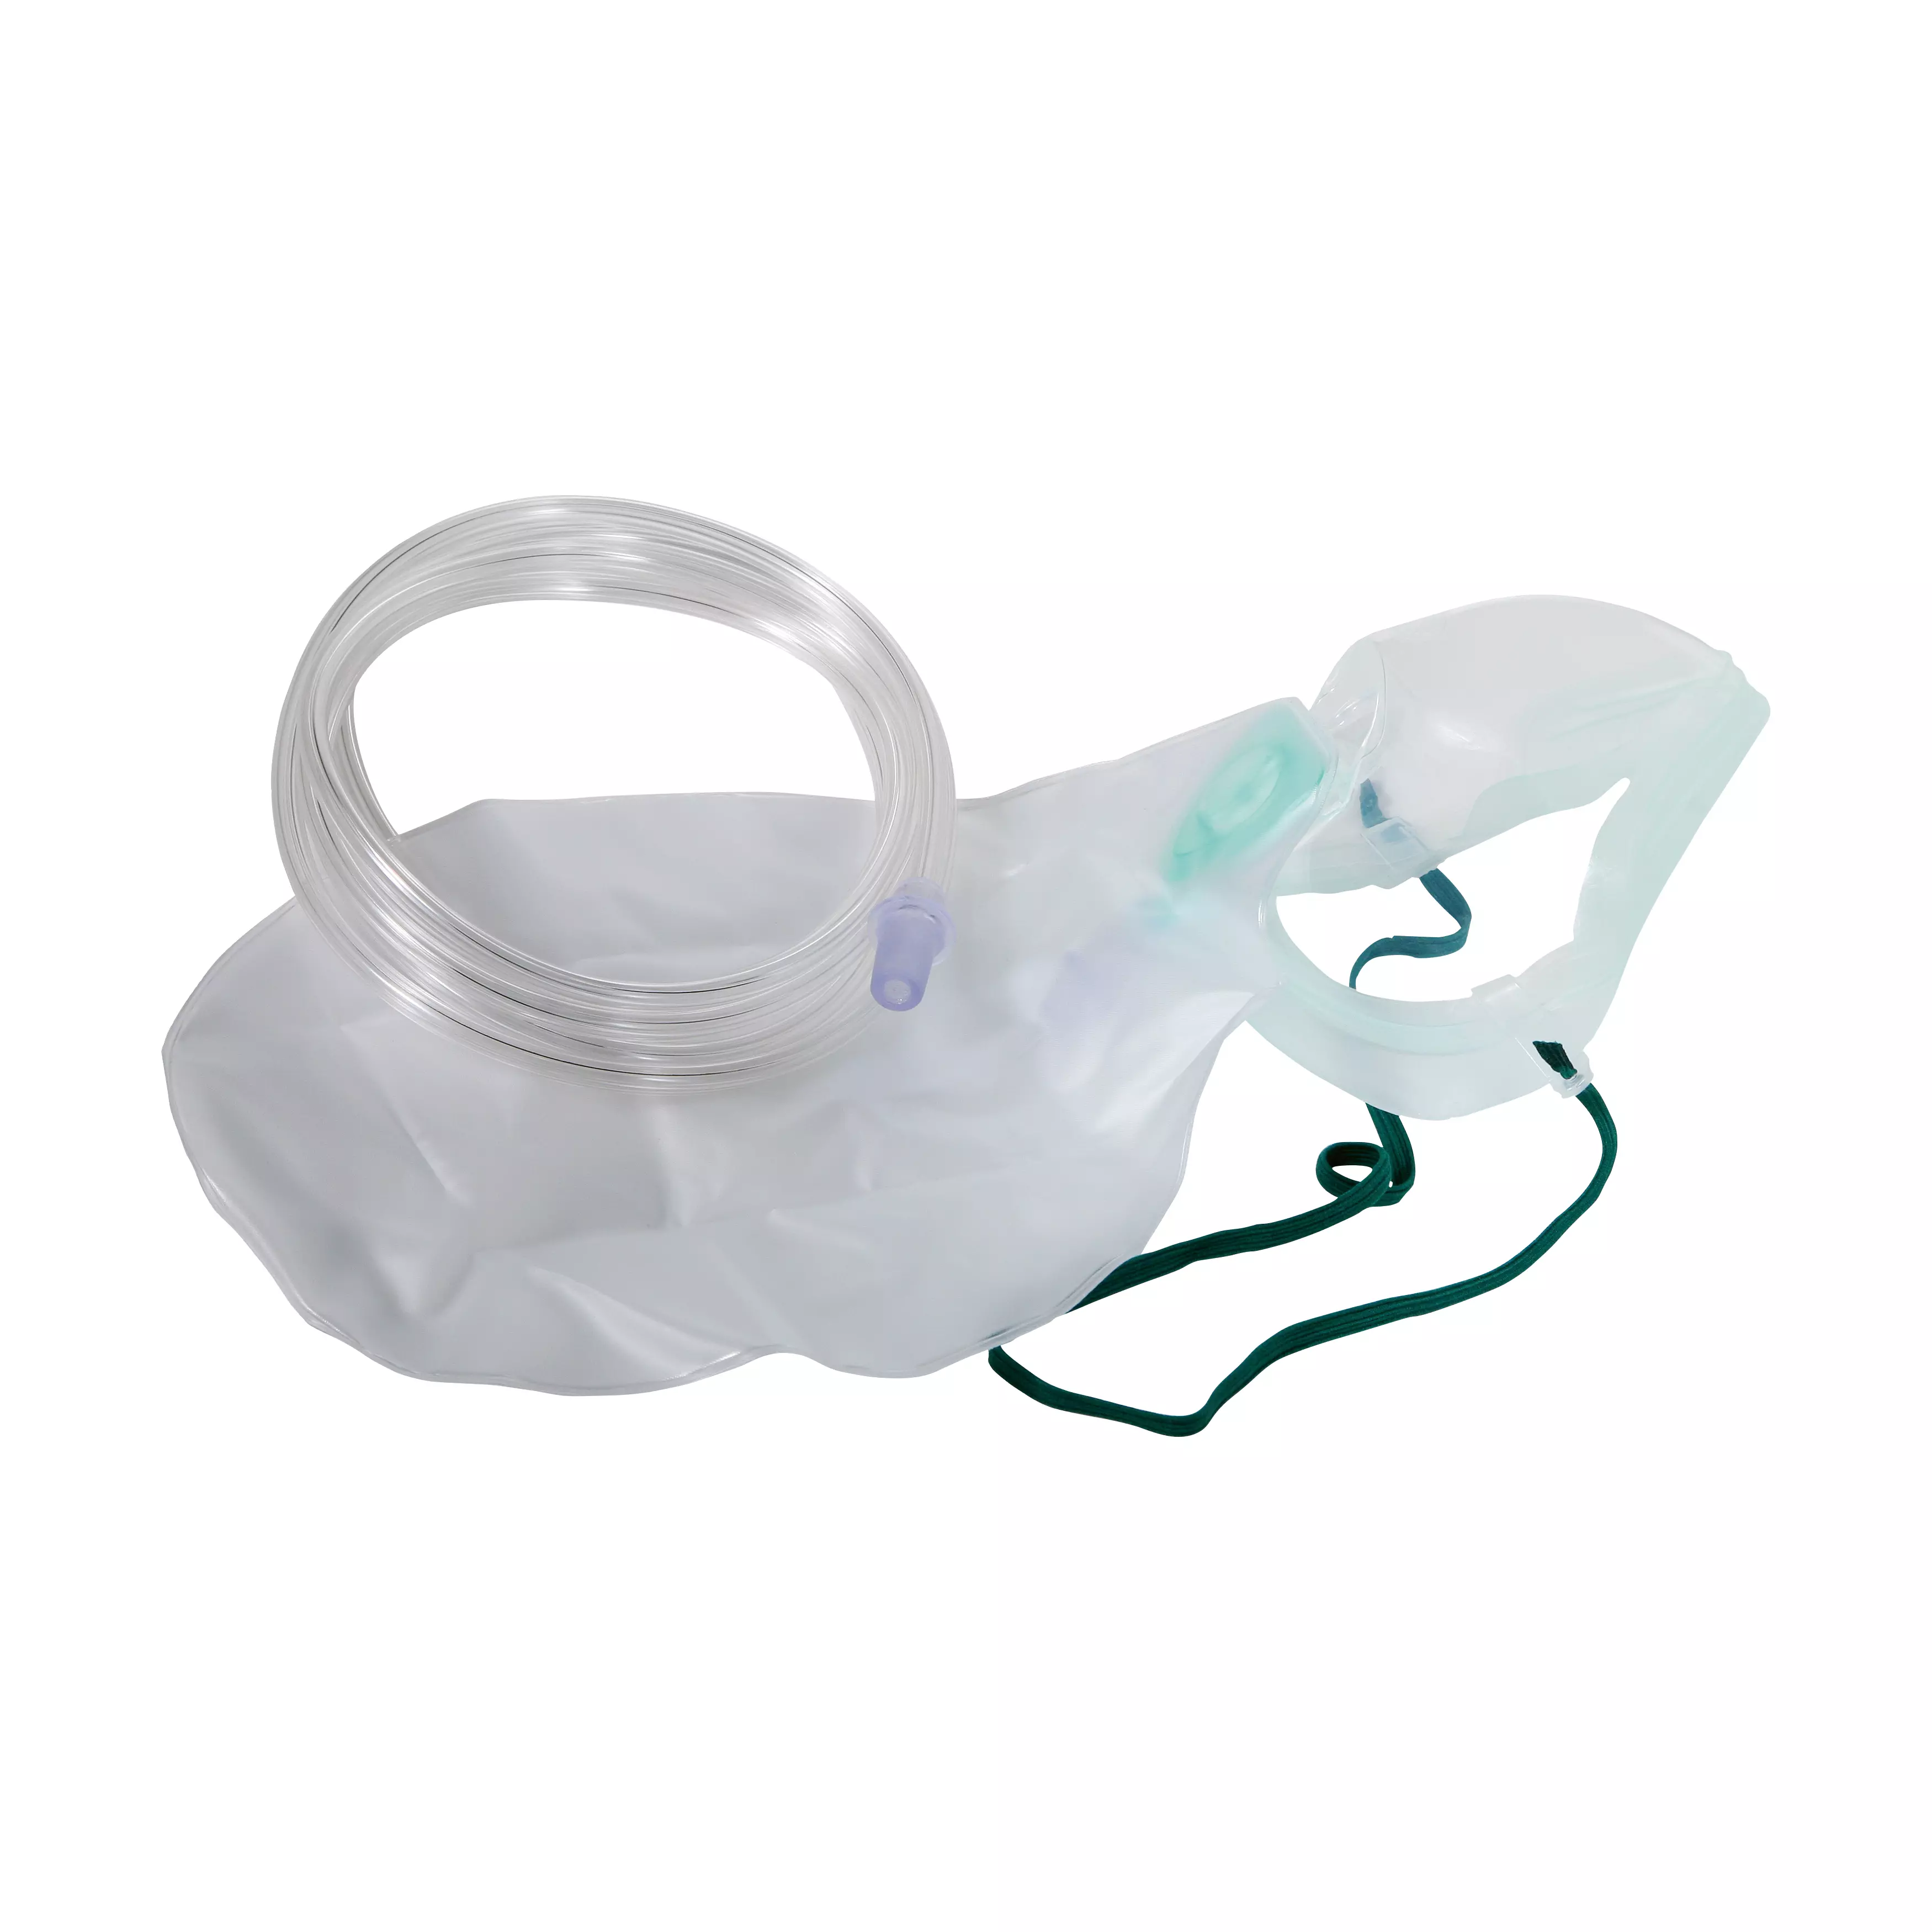 Oxygen inhalation mask with economy bag